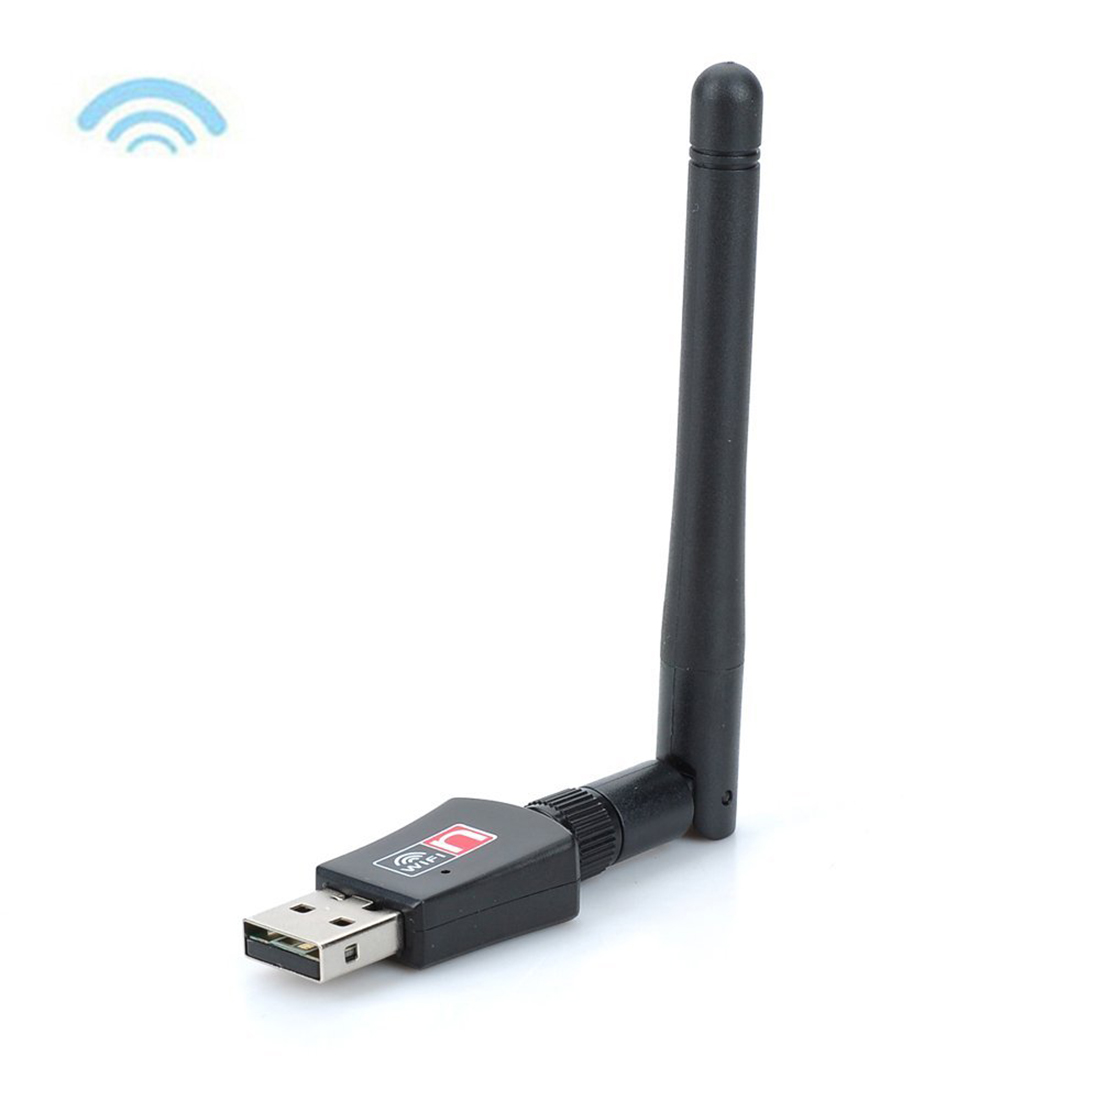 Patriot Wifi Usb Wireless-N Lan Adapter 64 Bit